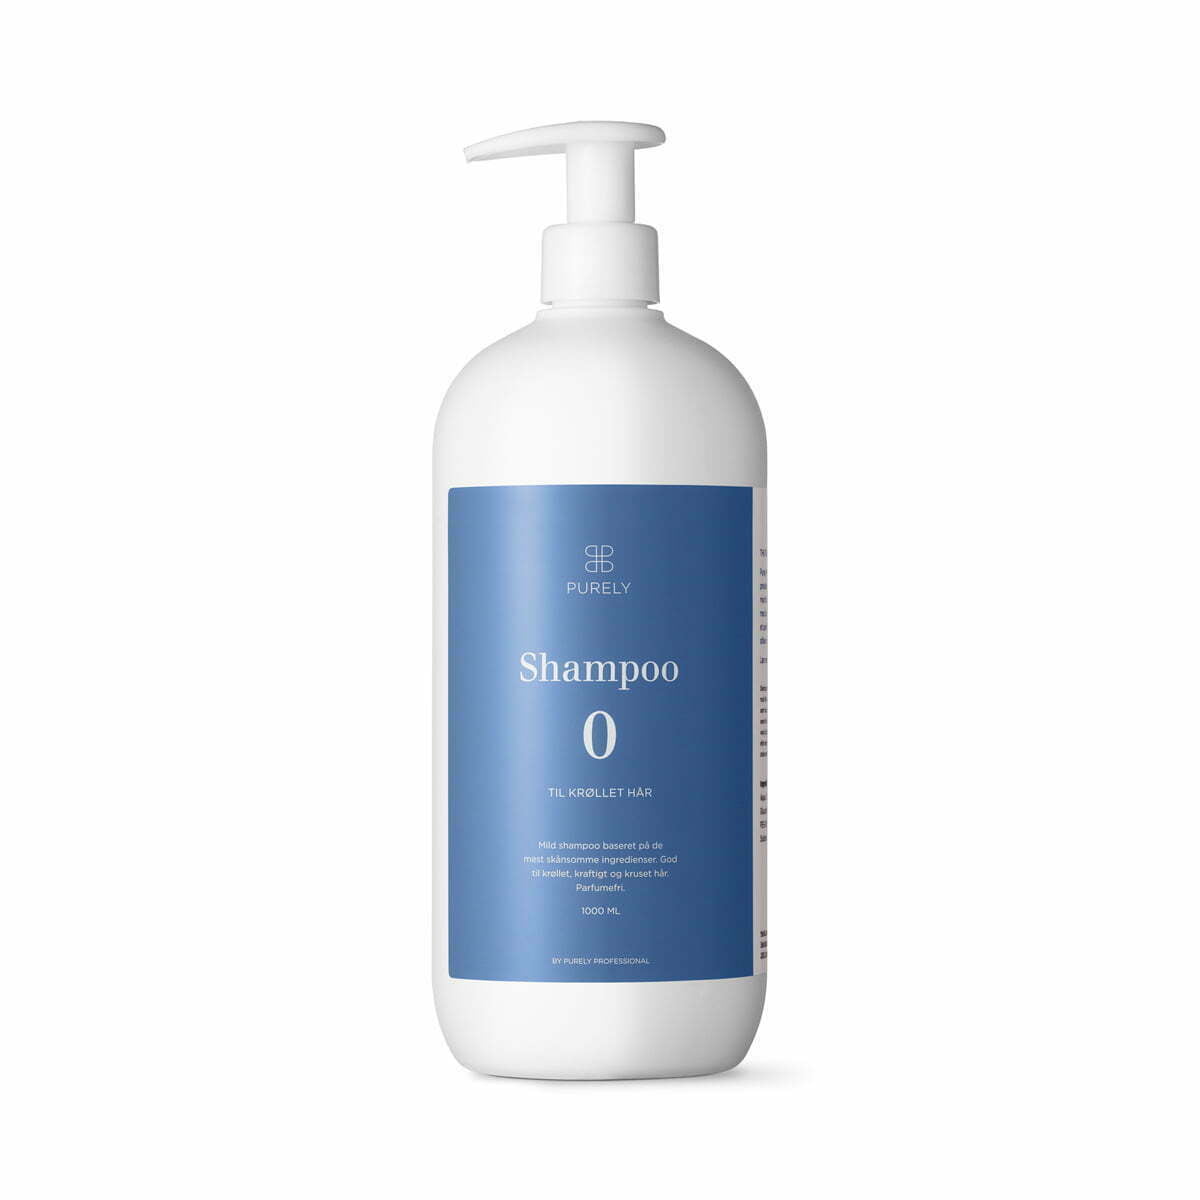 Shampoo 0 - 1000 ml